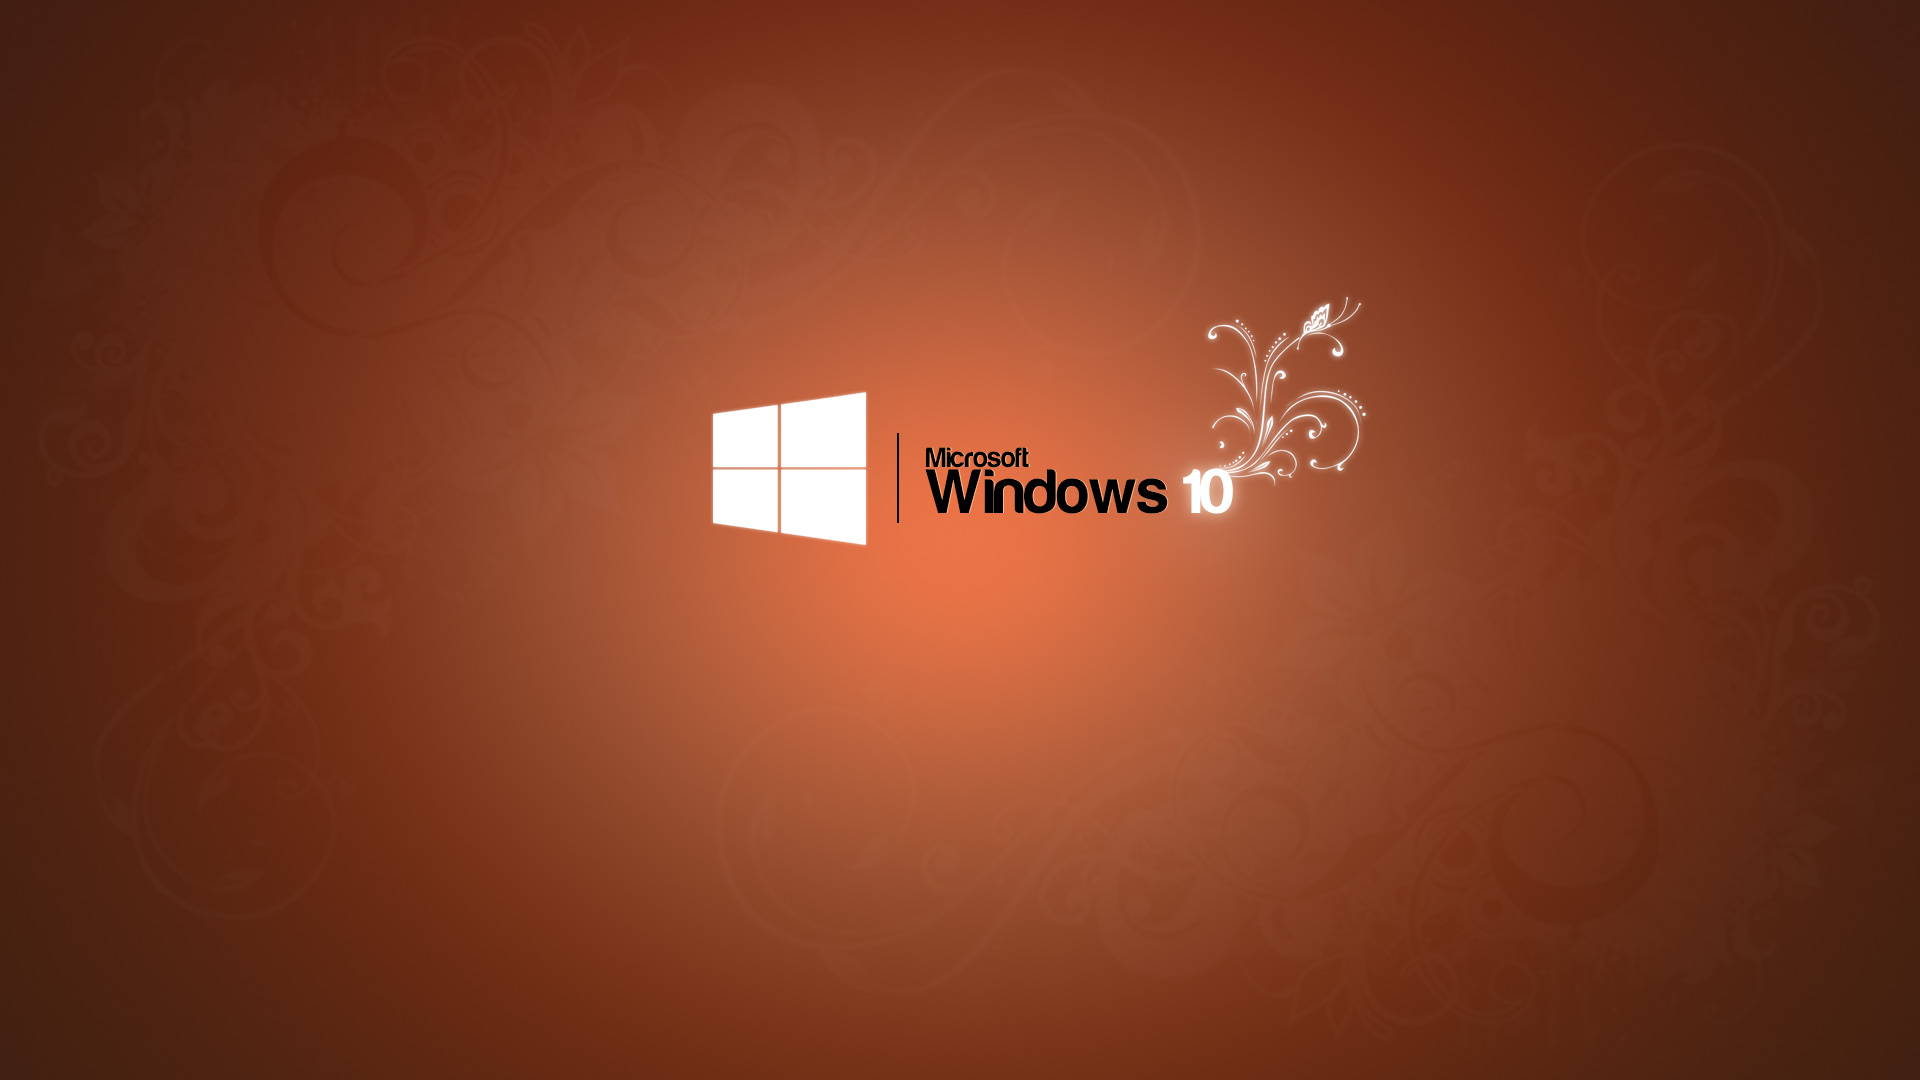 Windows 10 Full HD Background / 1920x1080